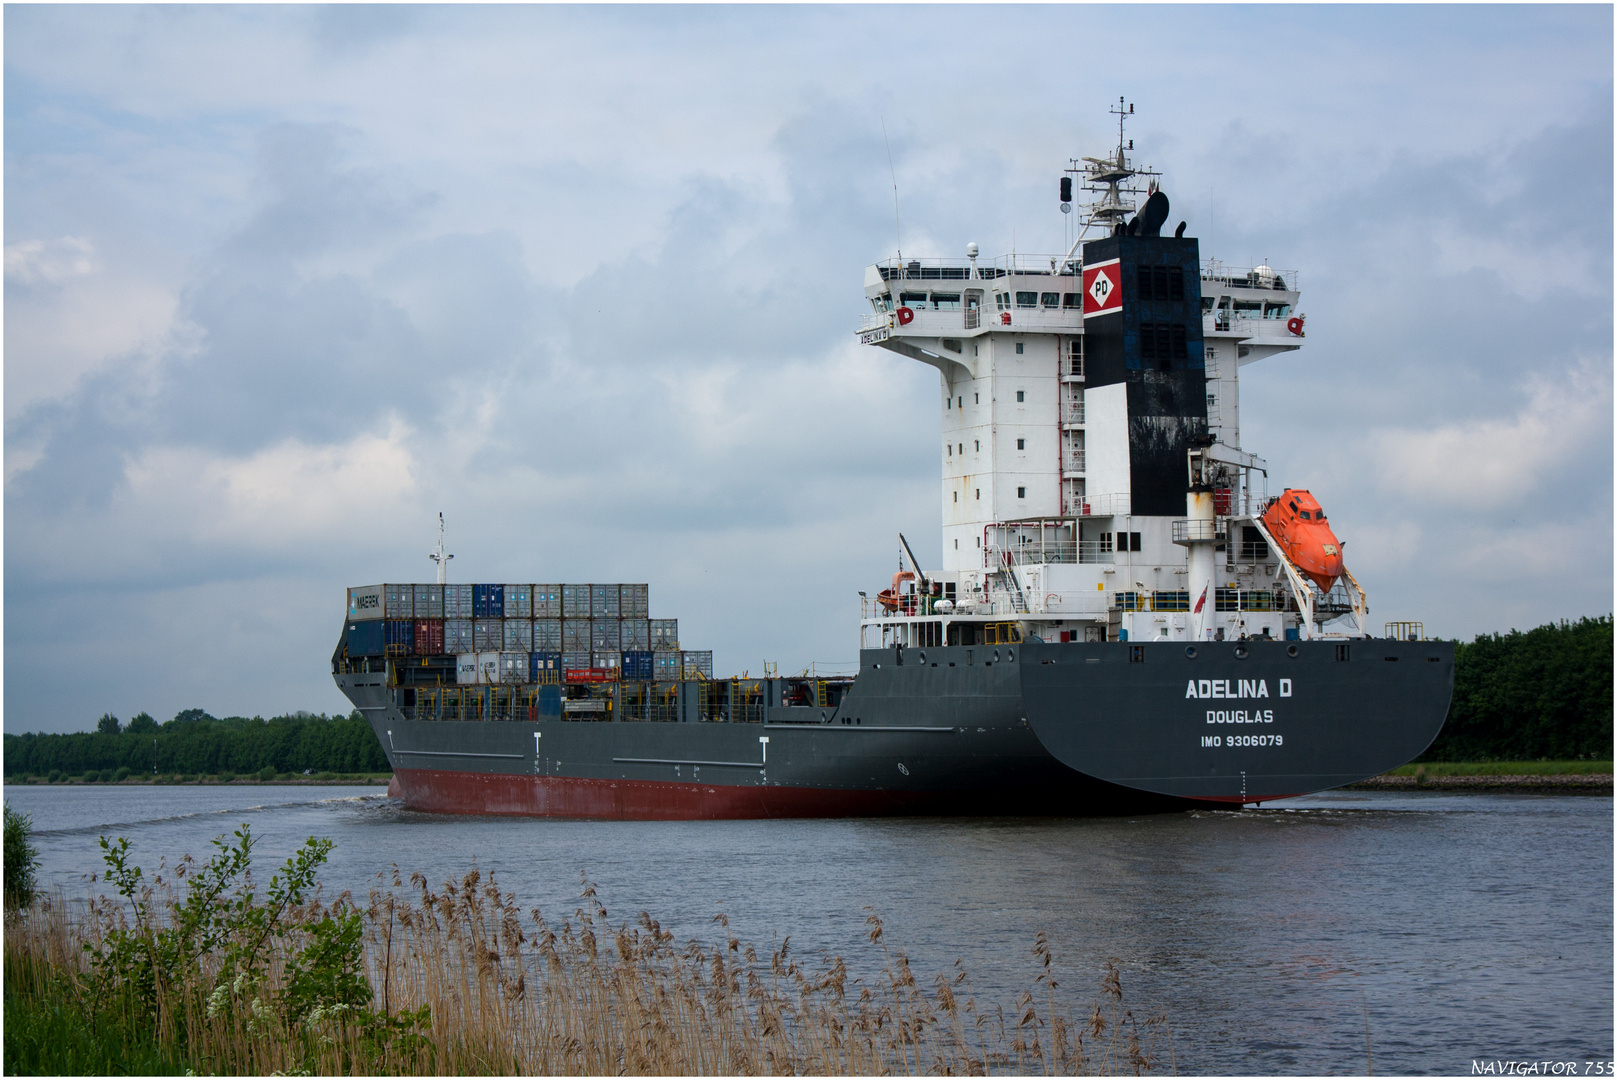 ADELINA D / Container ship / NOK 